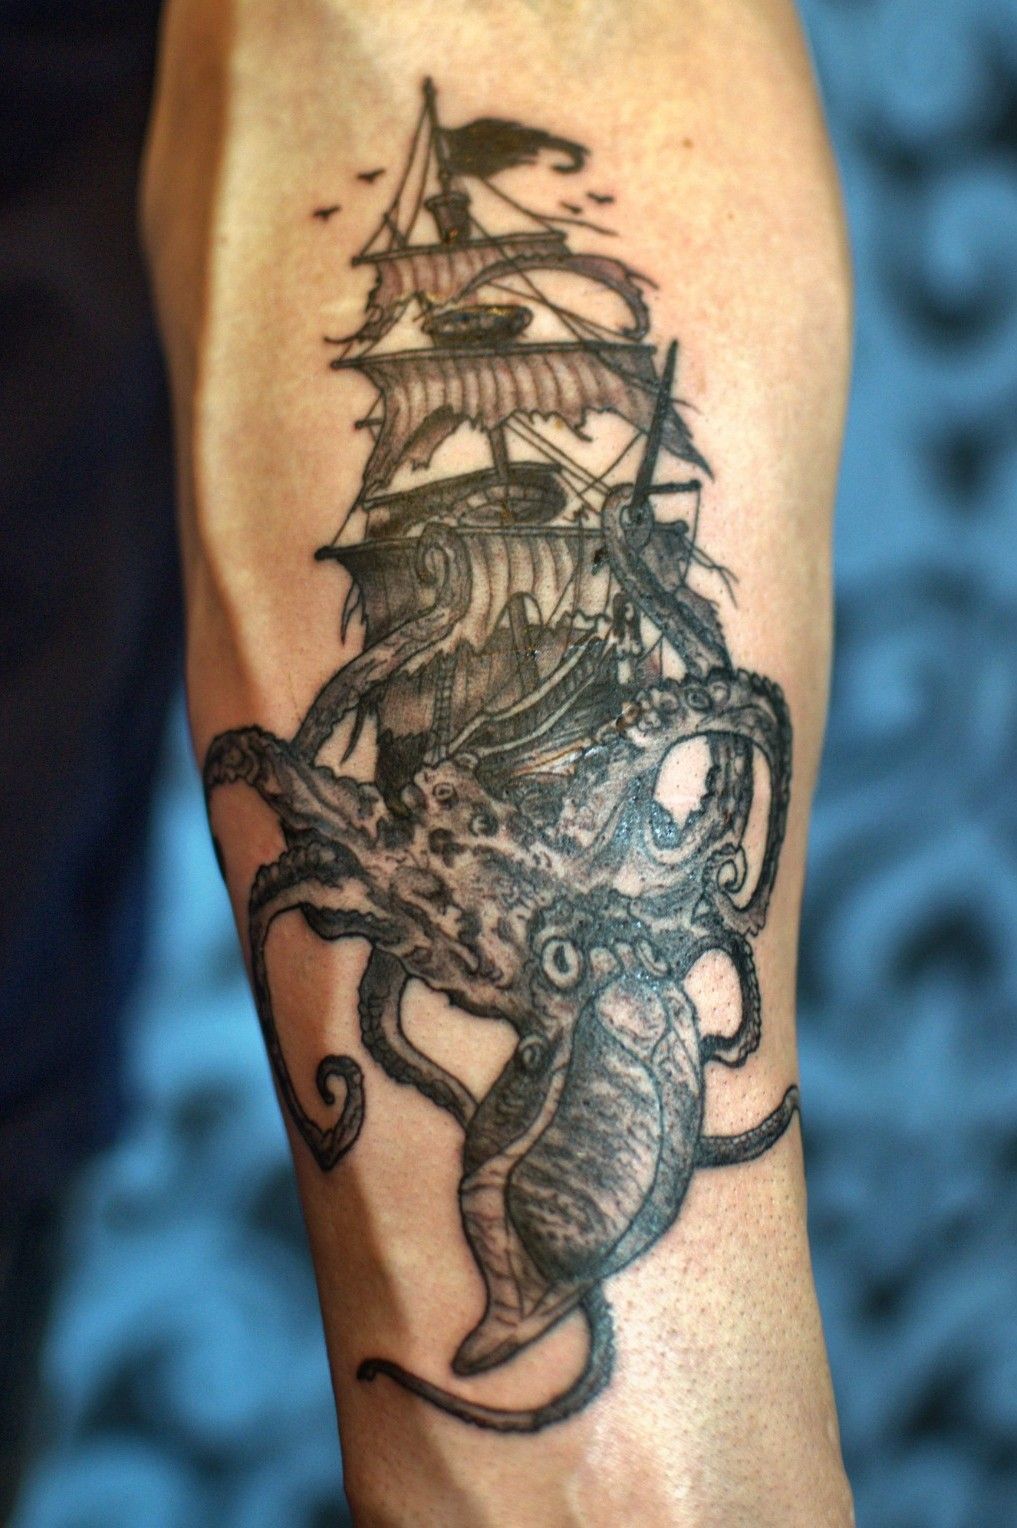 1337tattoos  Sleeve tattoos Inspirational tattoos Kraken tattoo